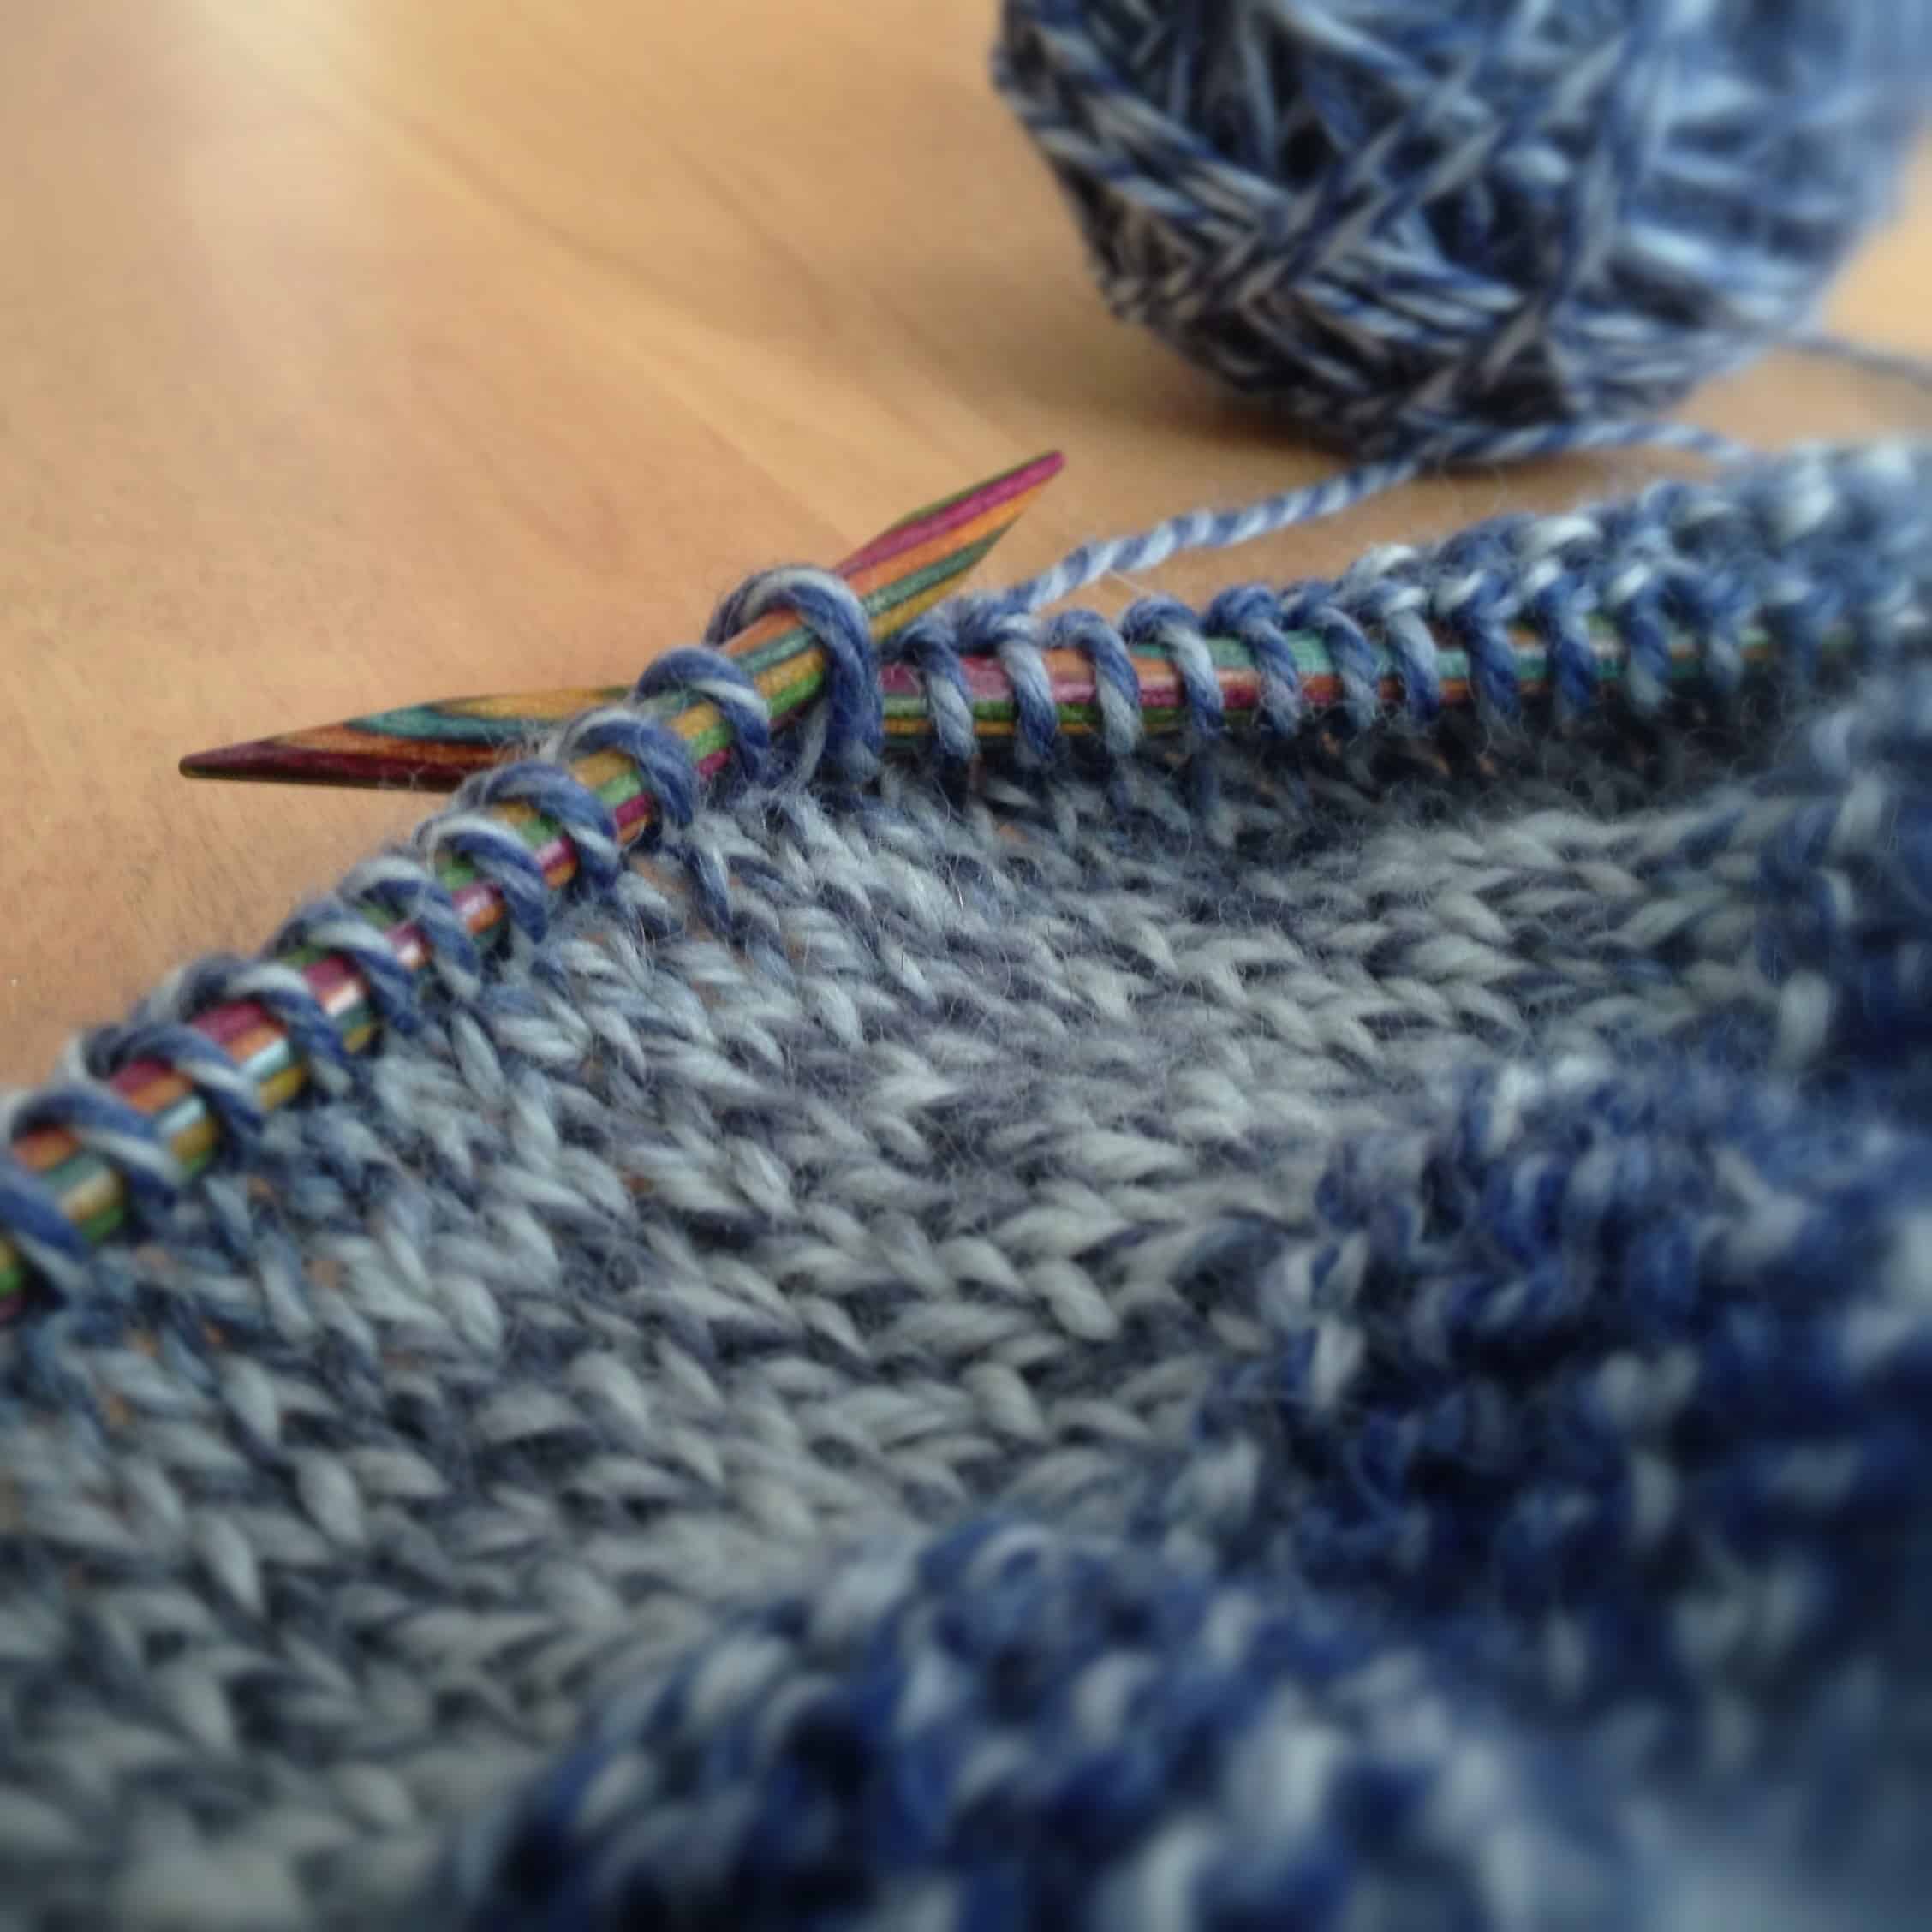 Knit shawl Project 365 Day 63 Deux Brins de Maille